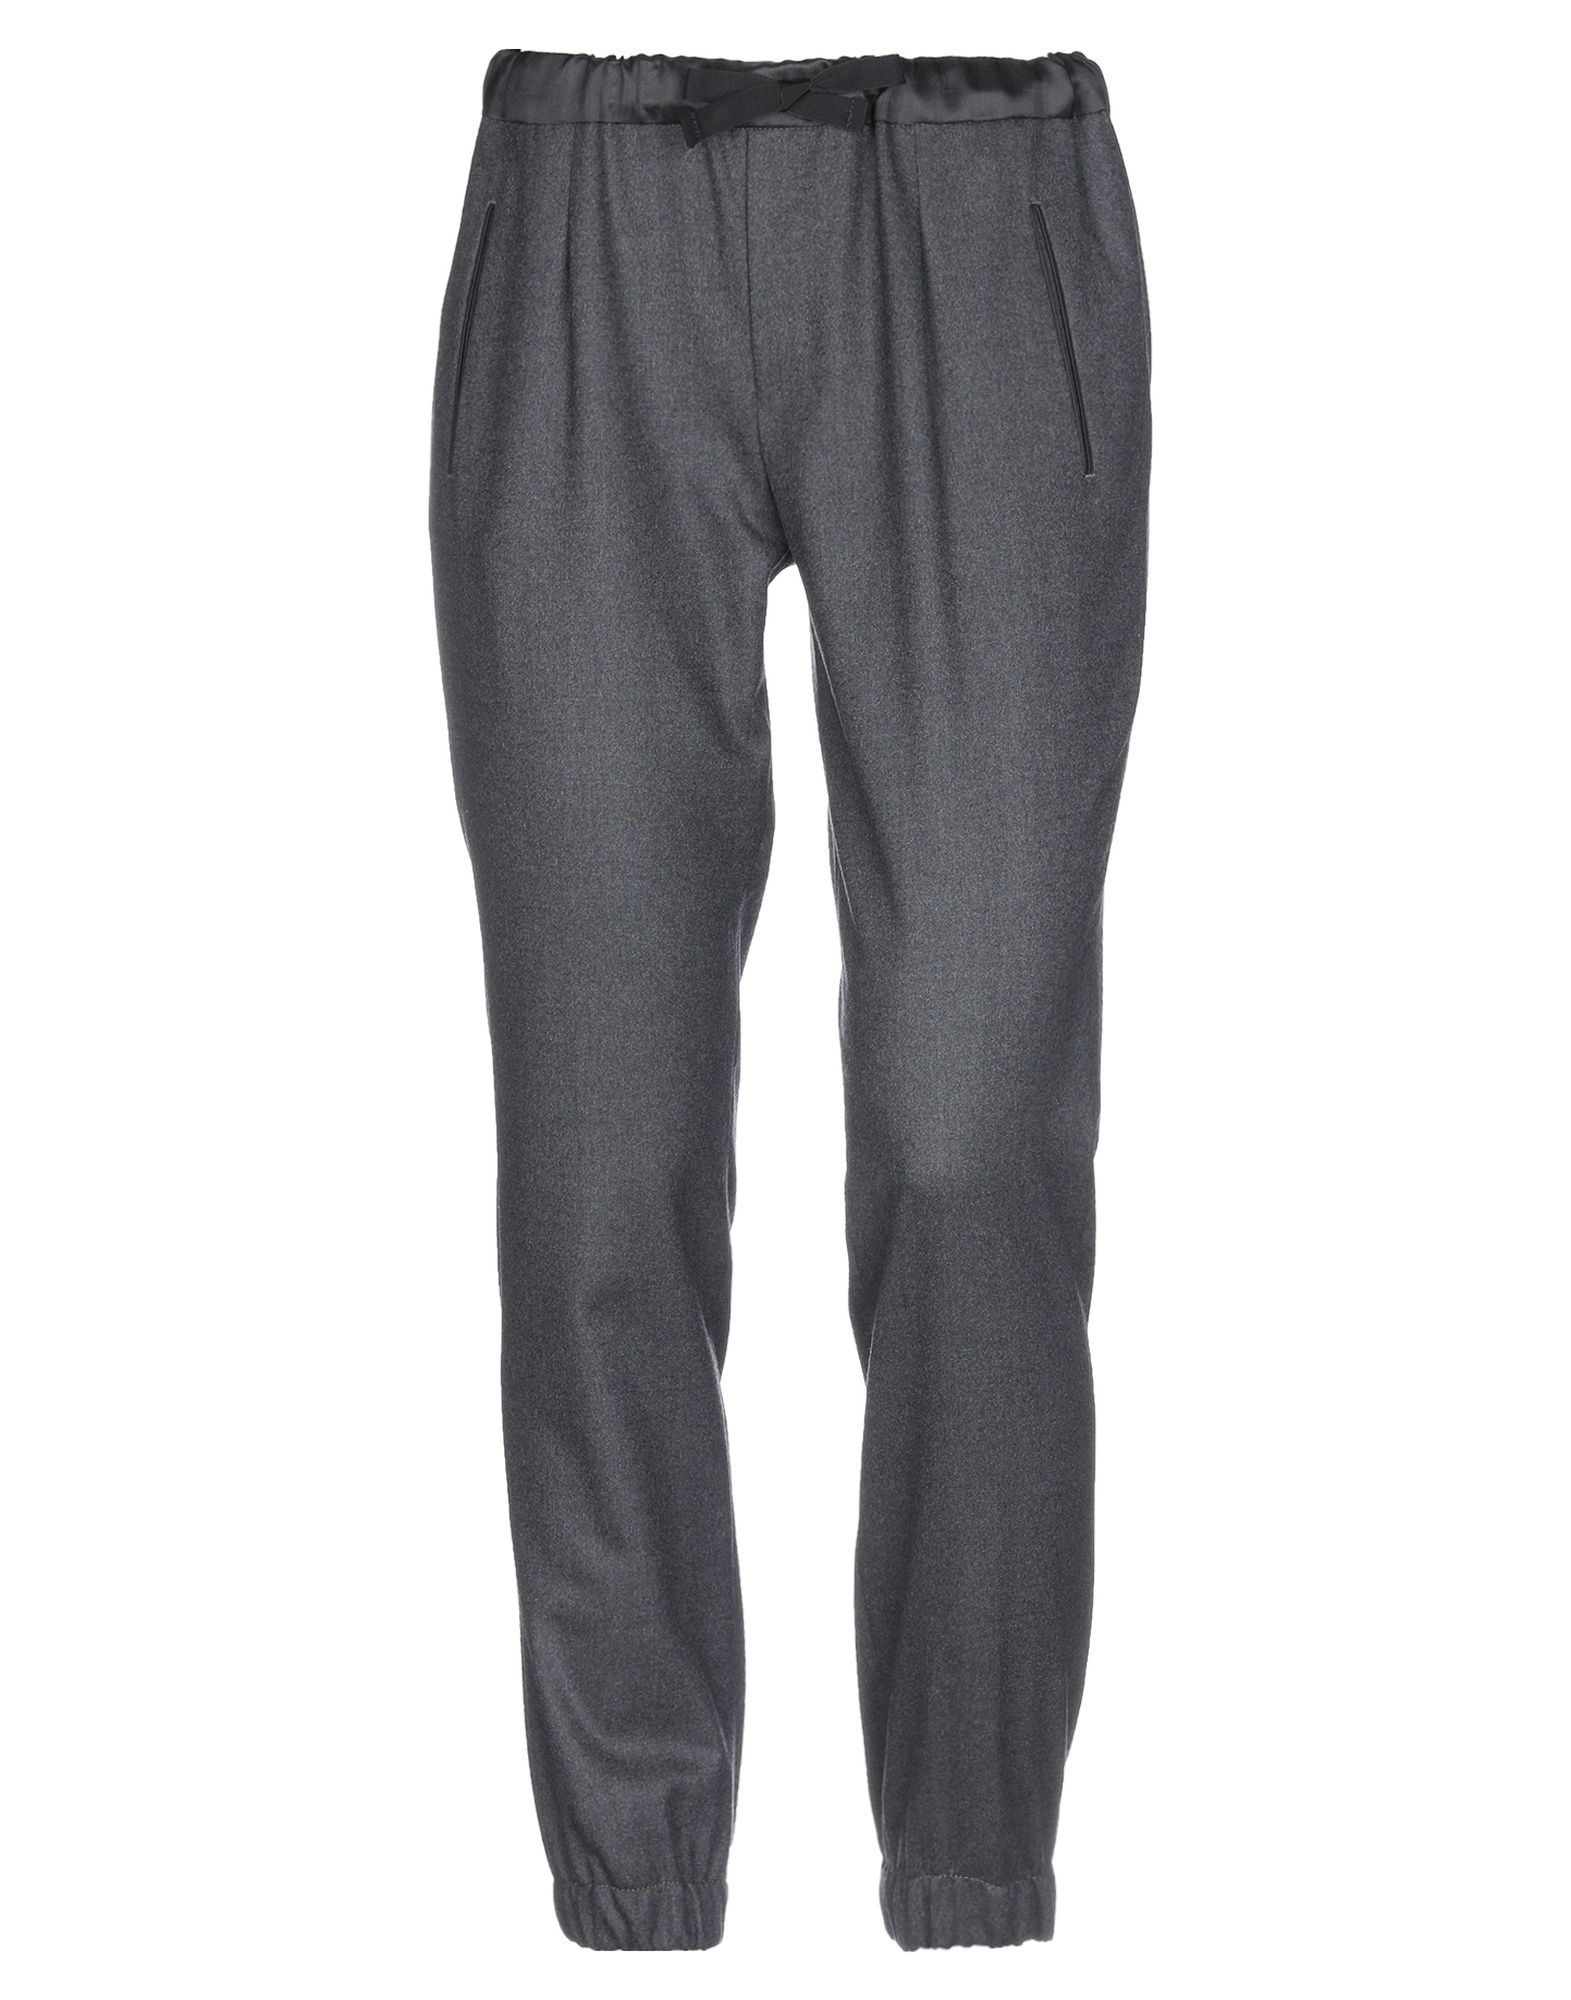 Pt0w Casual Pants In Steel Grey